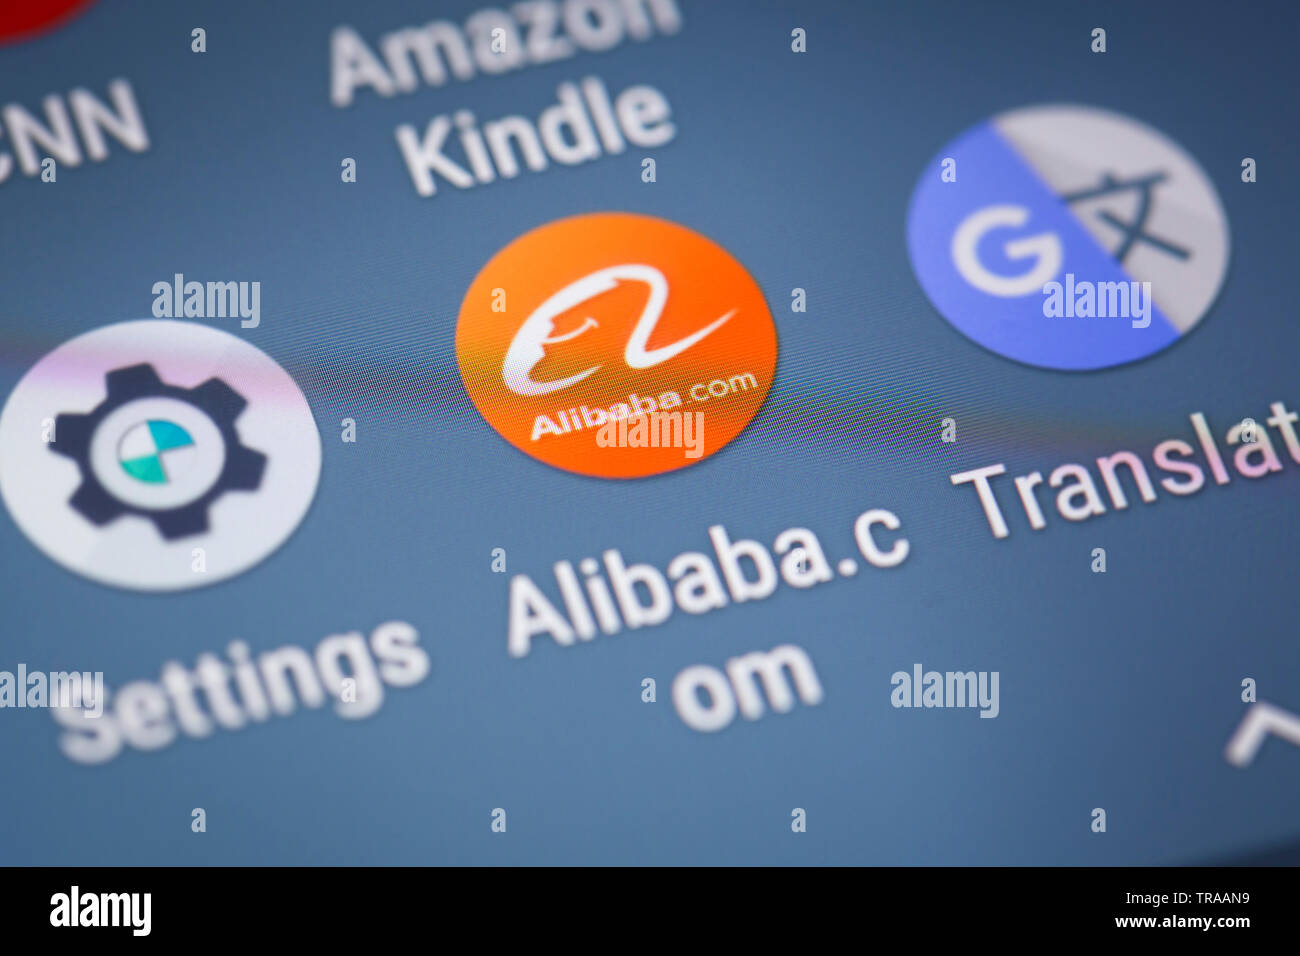 Alibaba.com logo icon on mobile phone screen Stock Photo